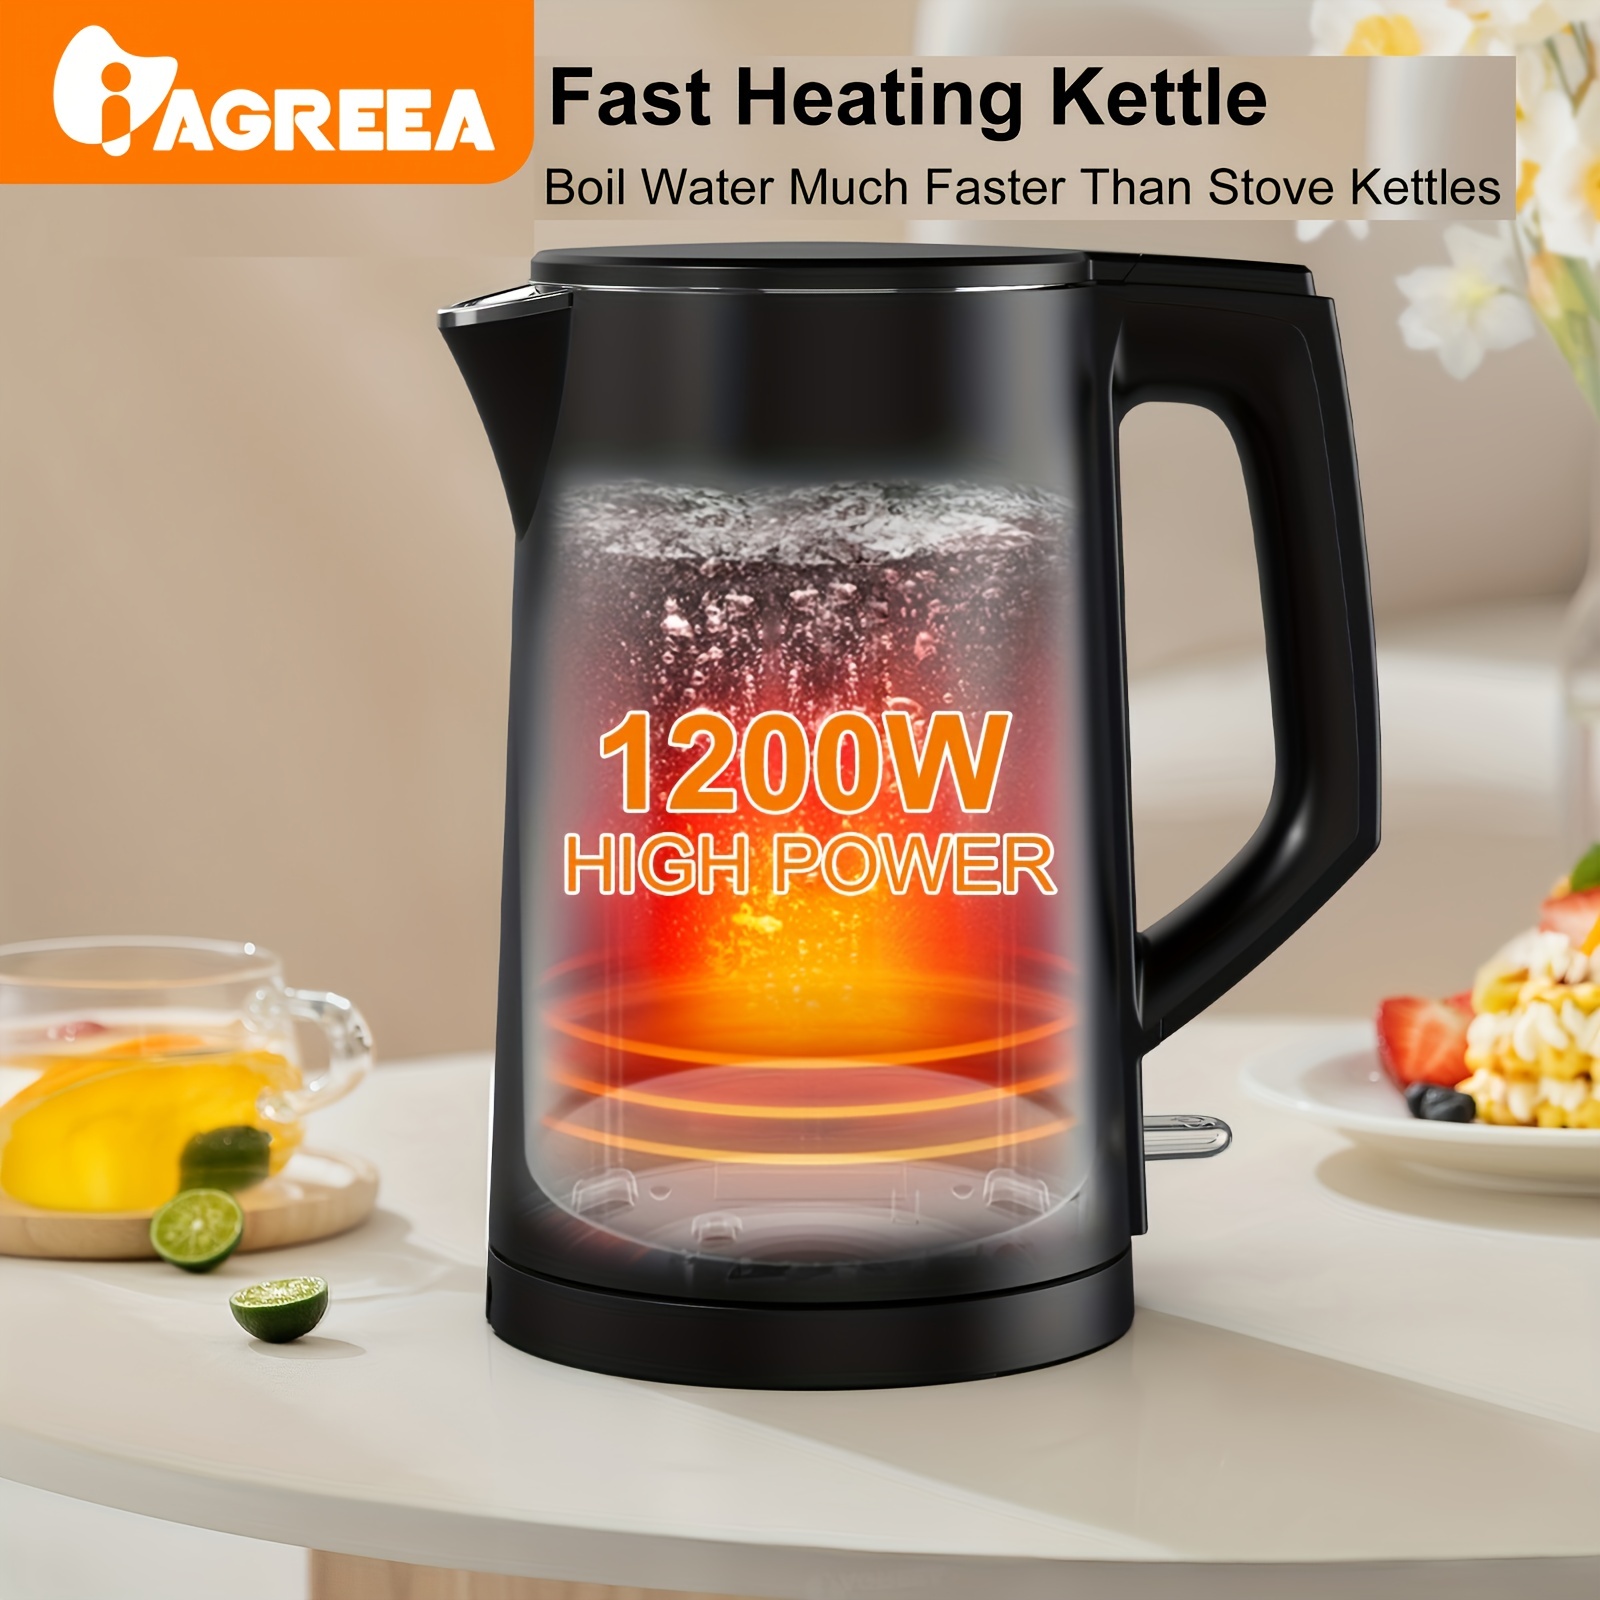 Electric Hot Tea Kettle, 1200w Quick Boil, Auto Shut-Off and Boil